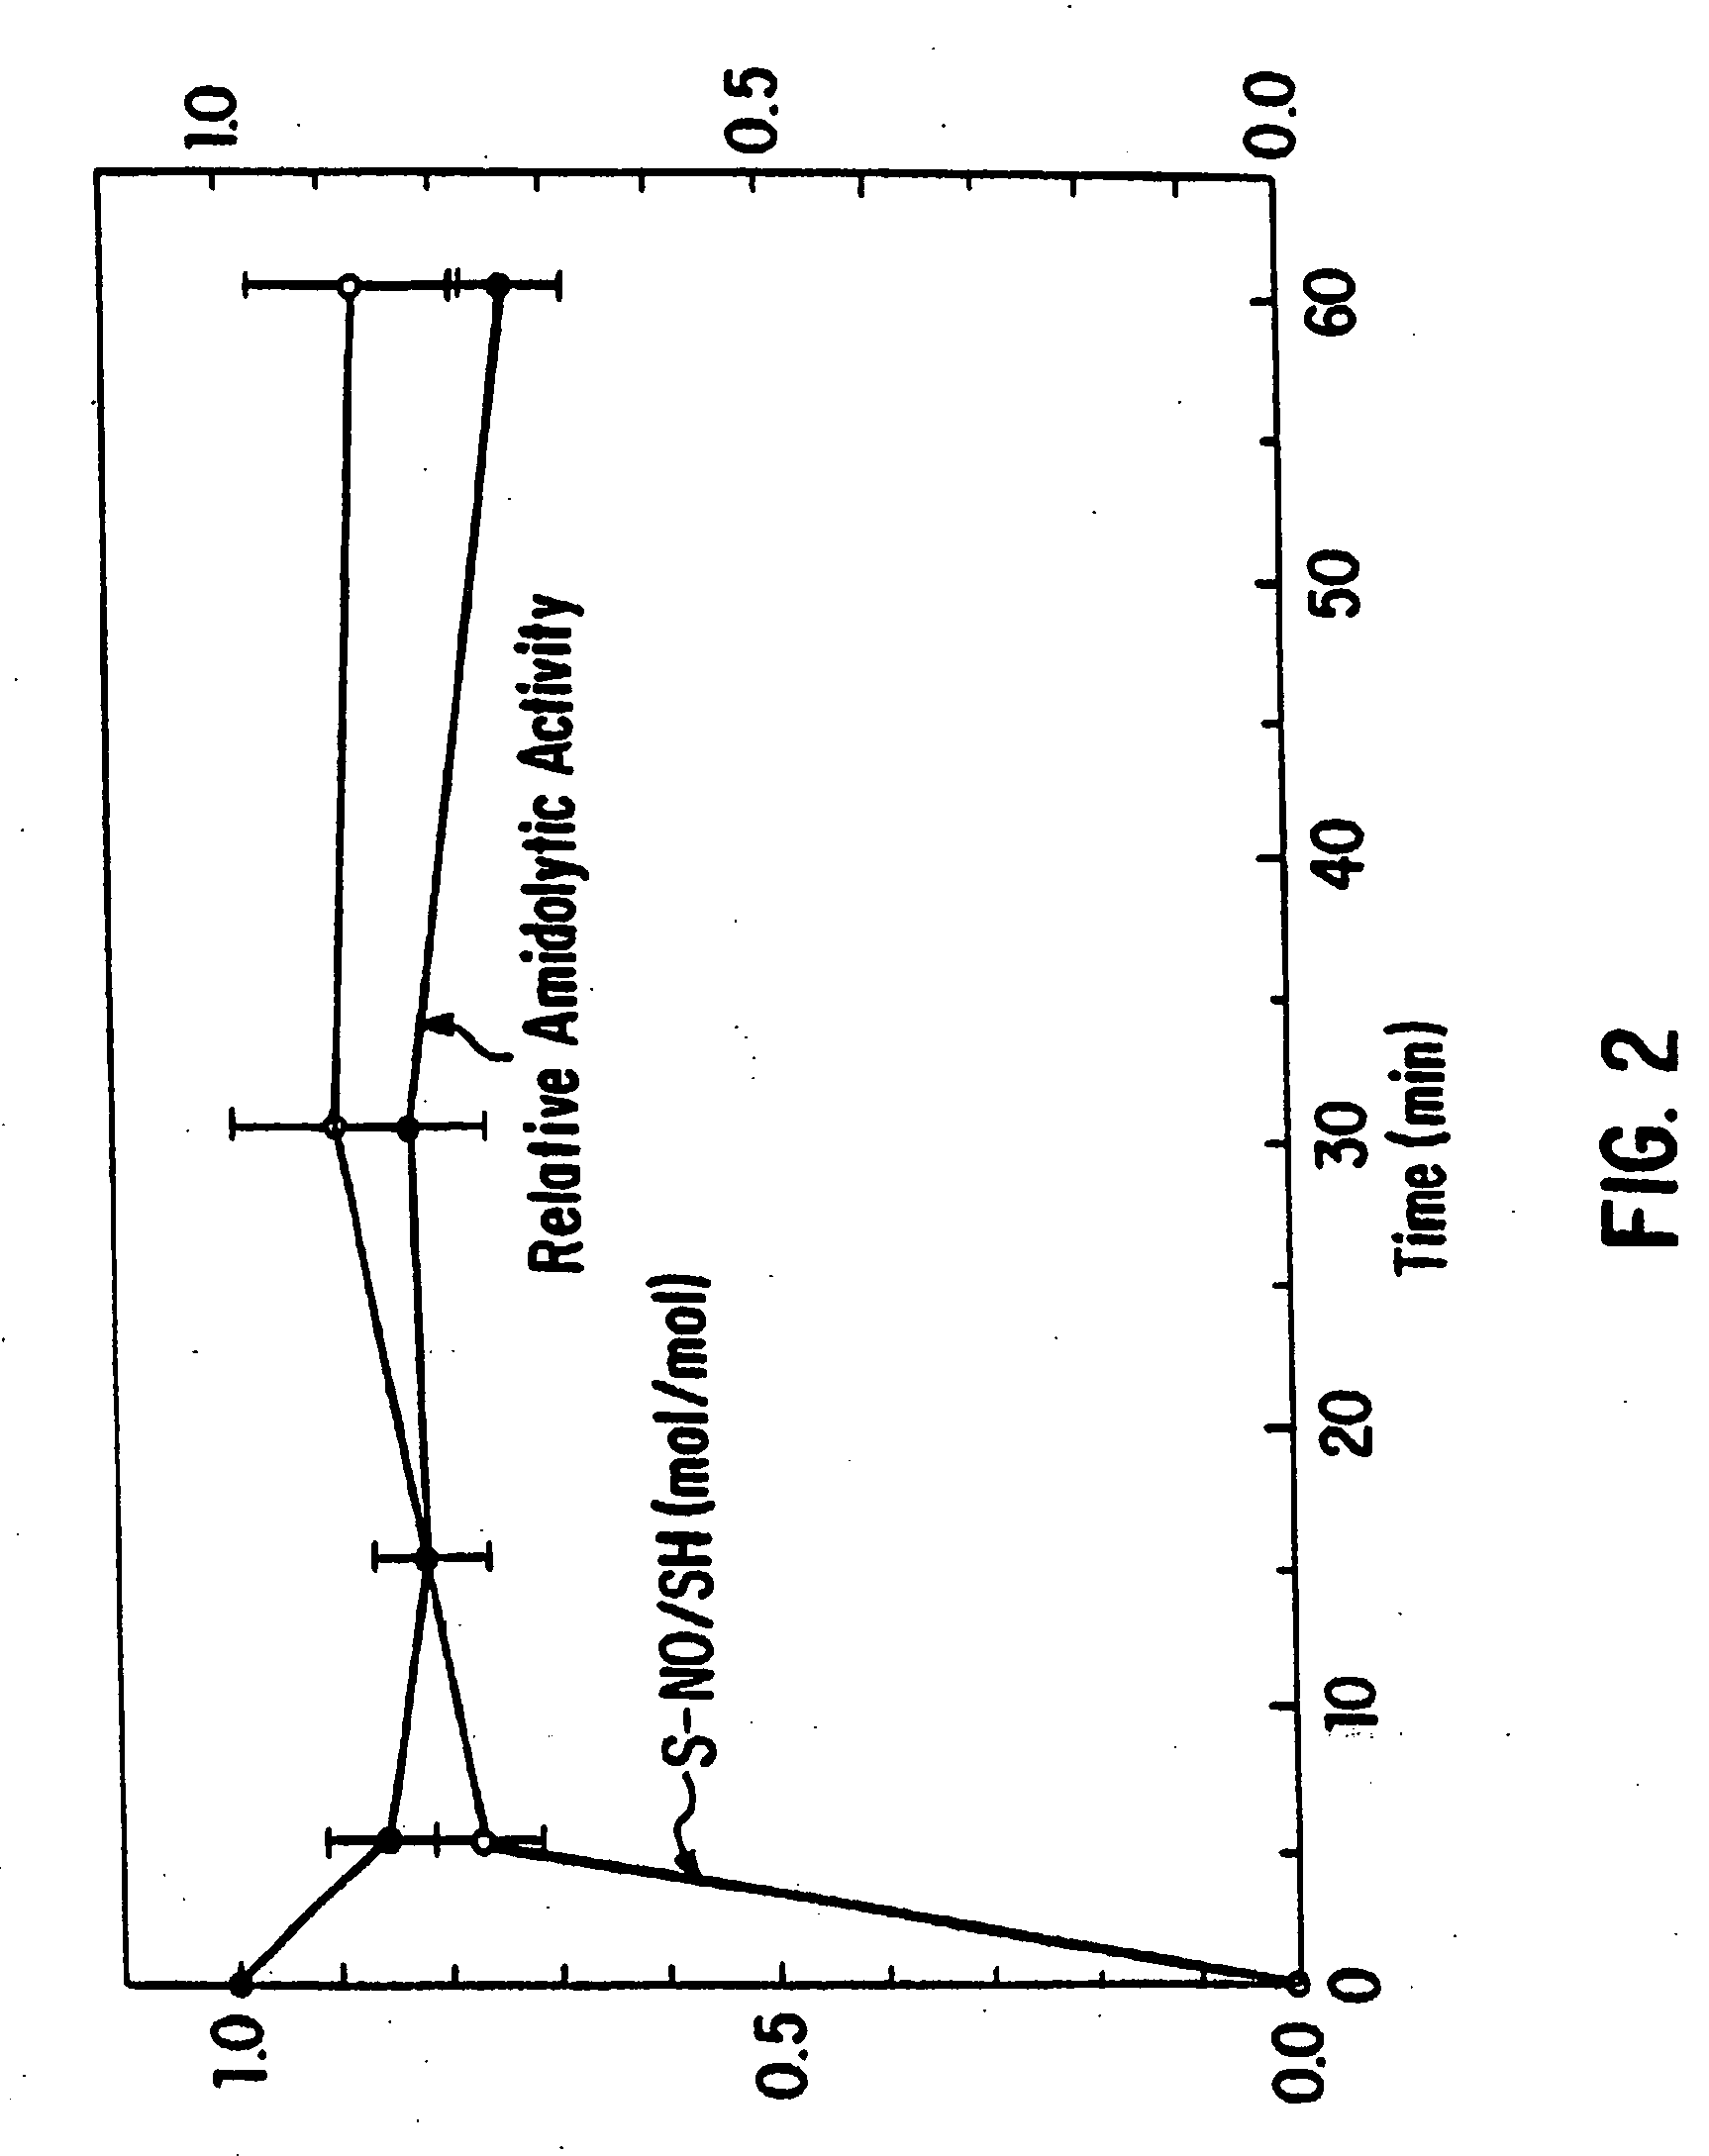 Nitrosated and nitrosylated heme proteins